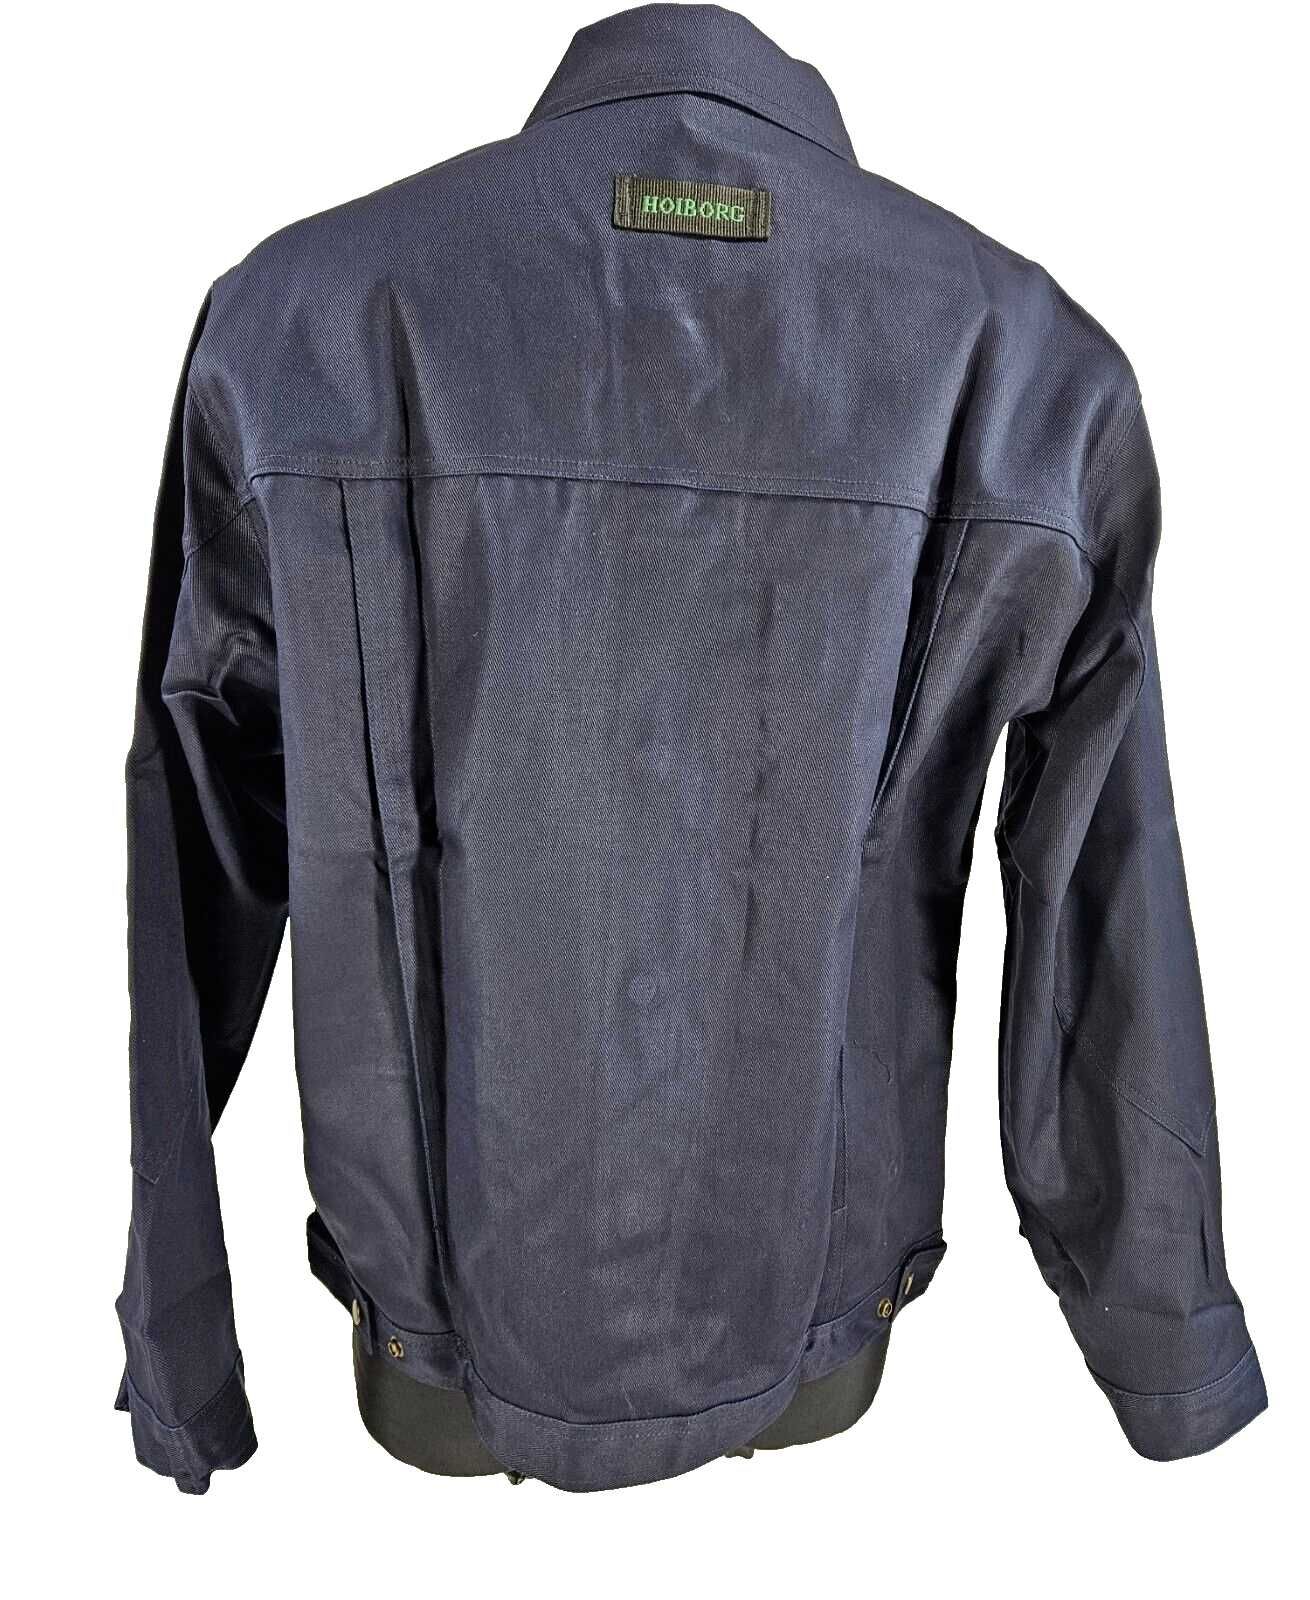 Bluza robocza bawełniana HOIBORG r. XL